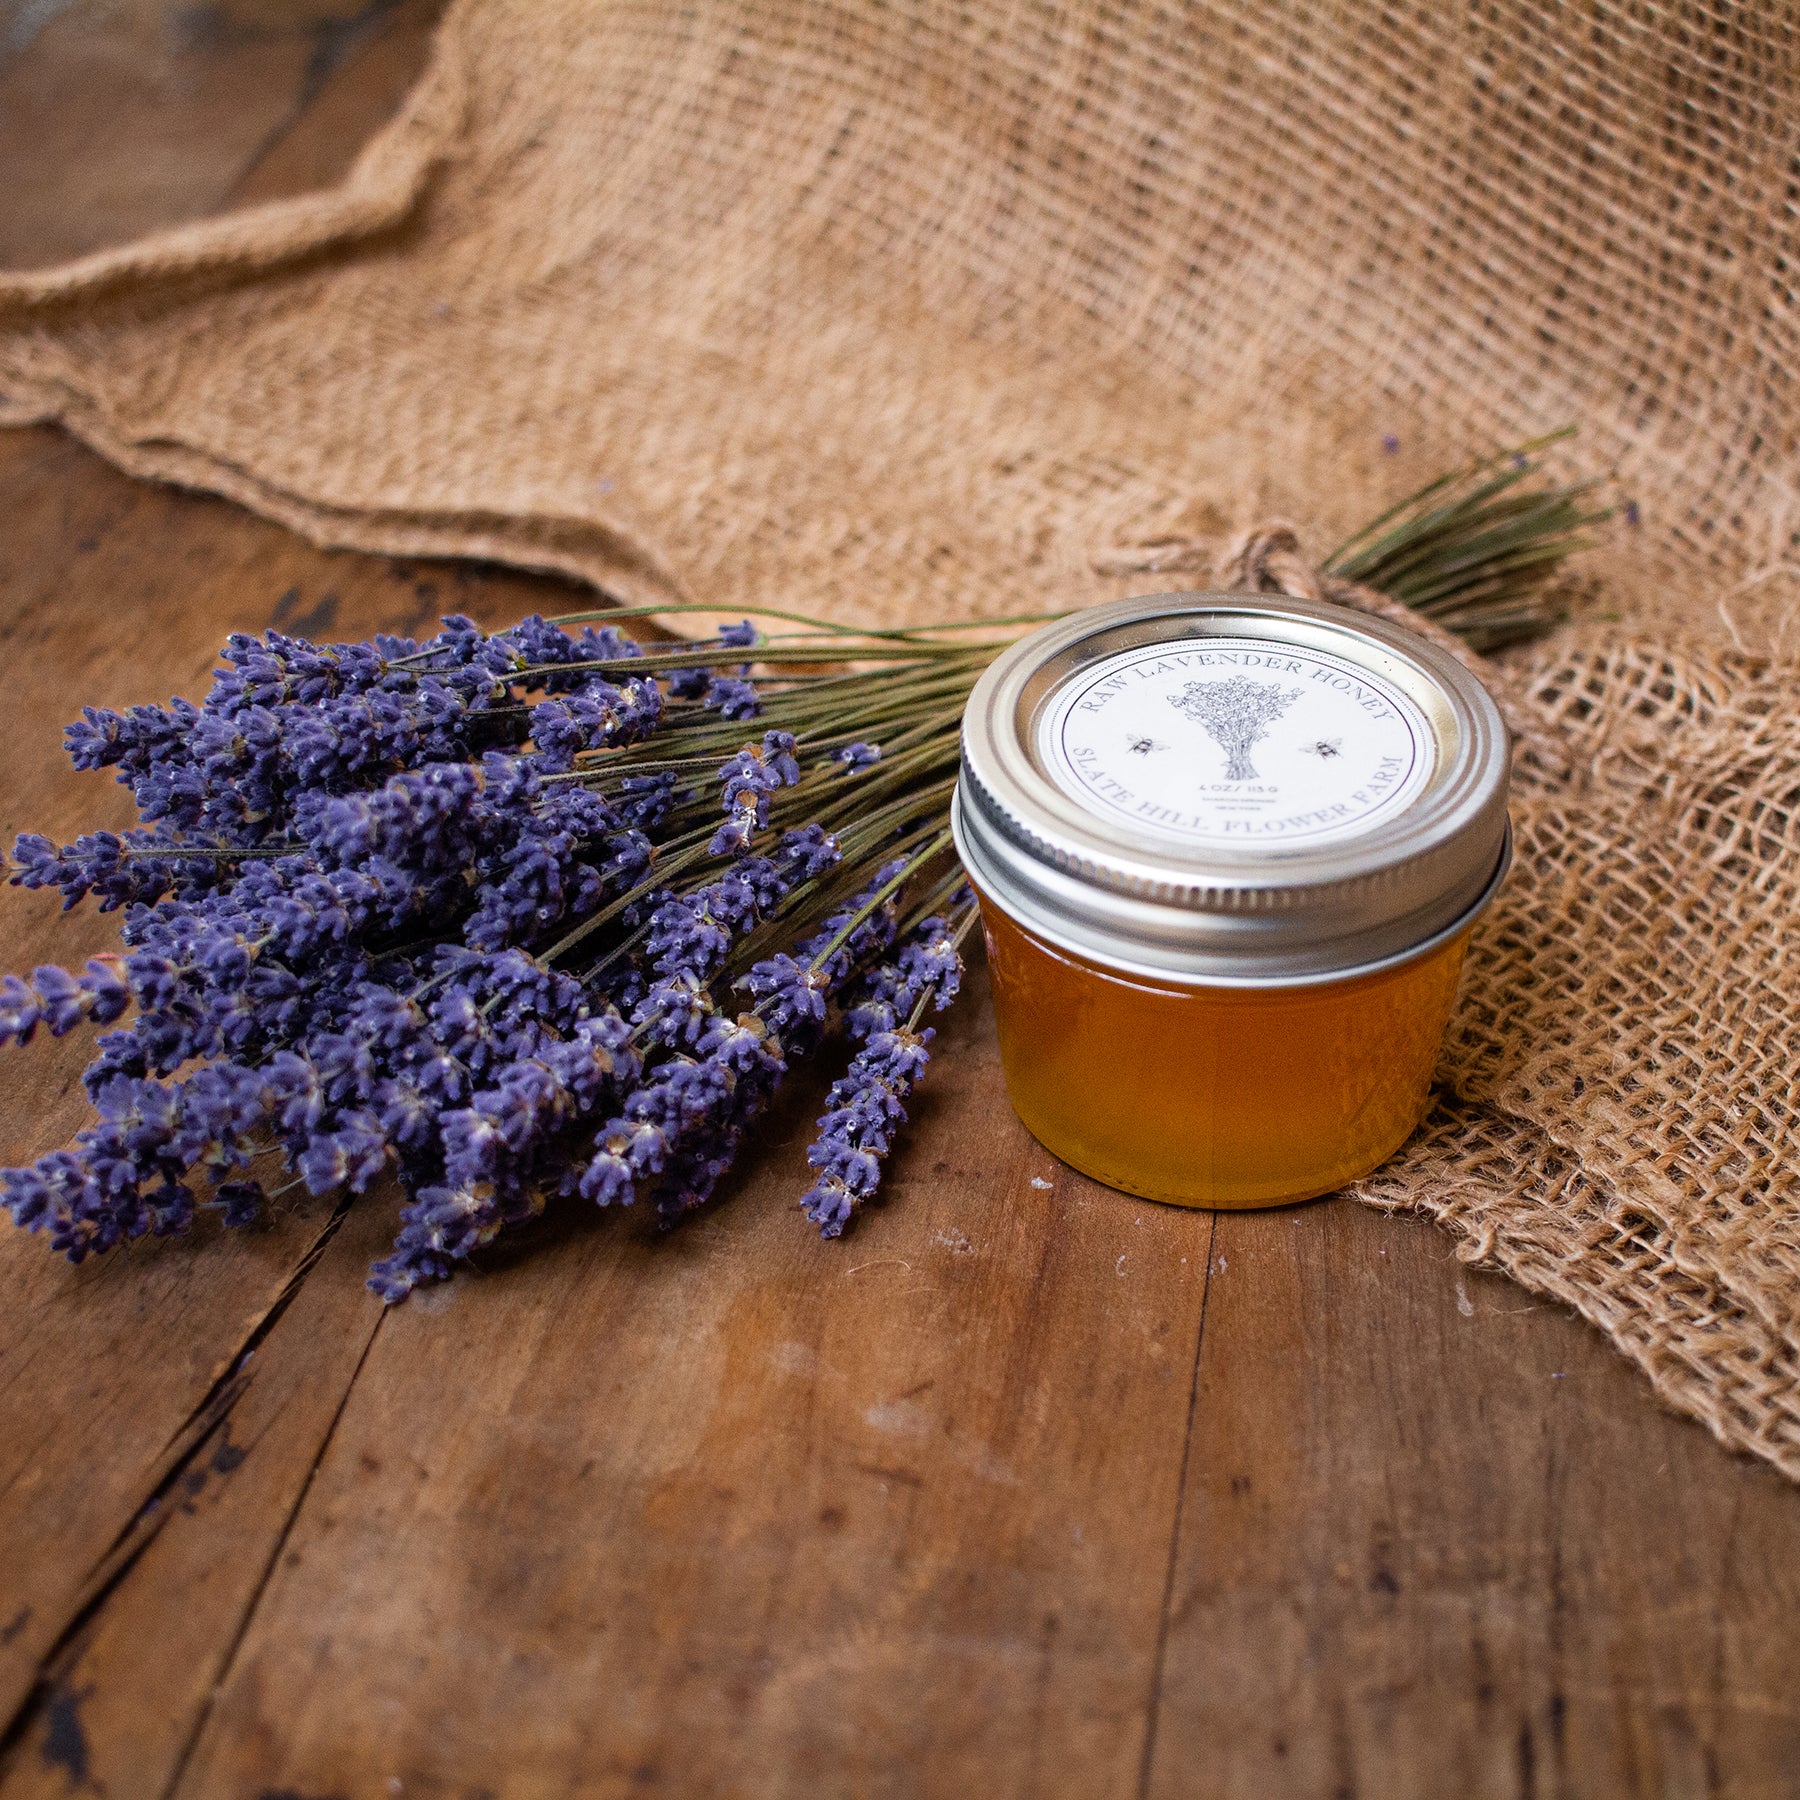 Small glass jar of lavender honey next to a lavender bundle on burlap.